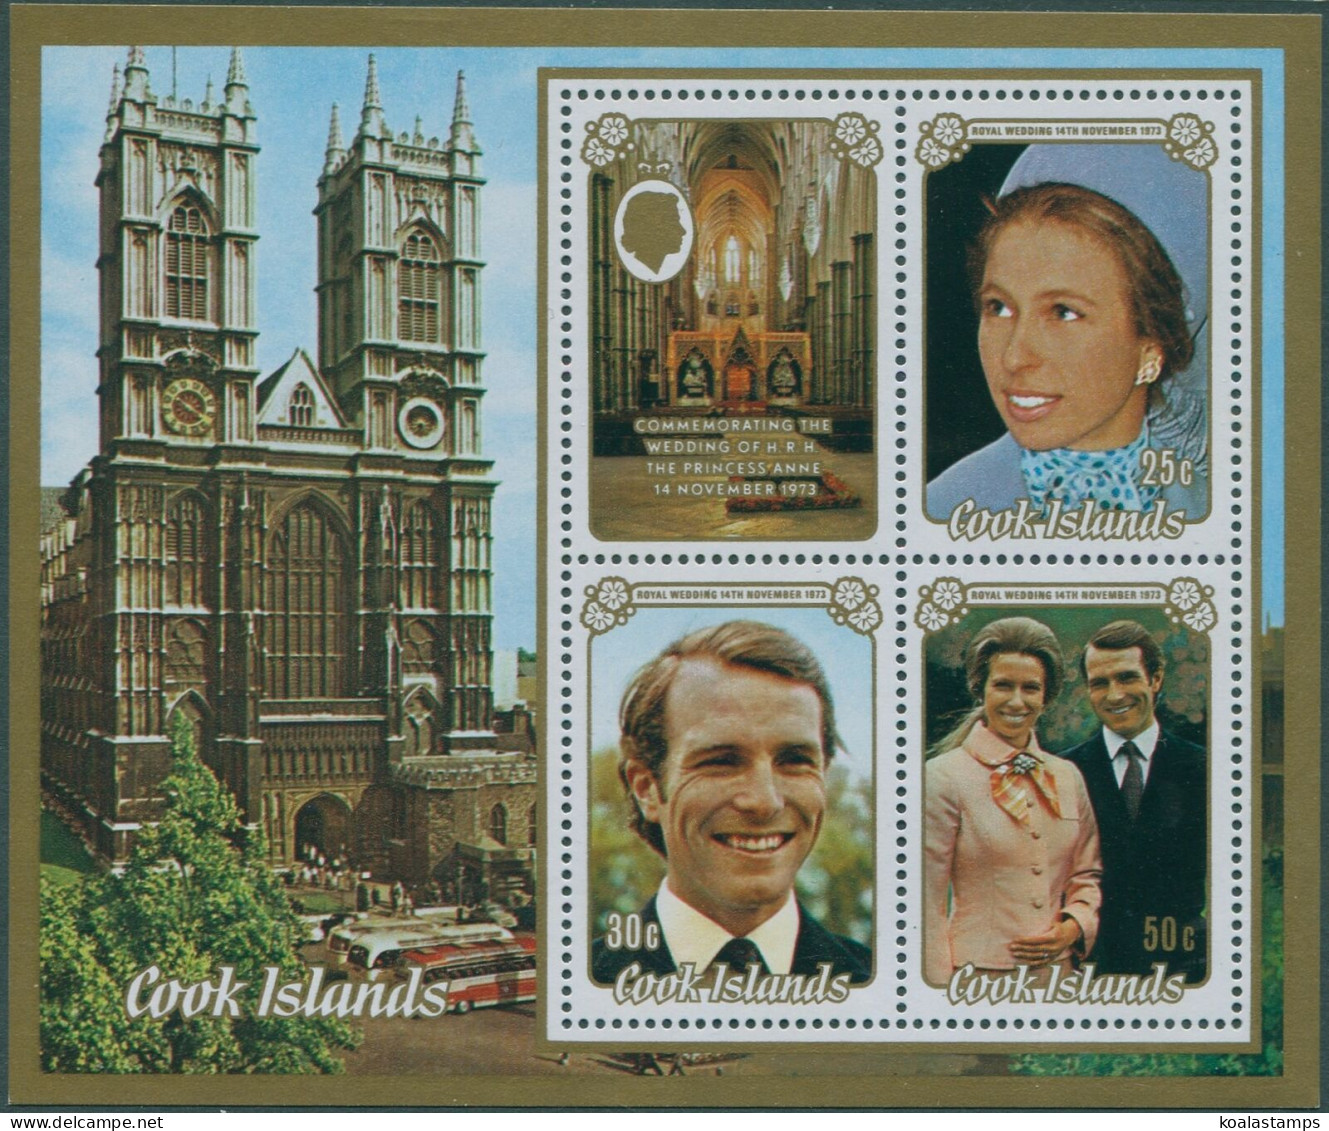 Cook Islands 1973 SG453 Princess Anne Wedding MS MNH - Cook